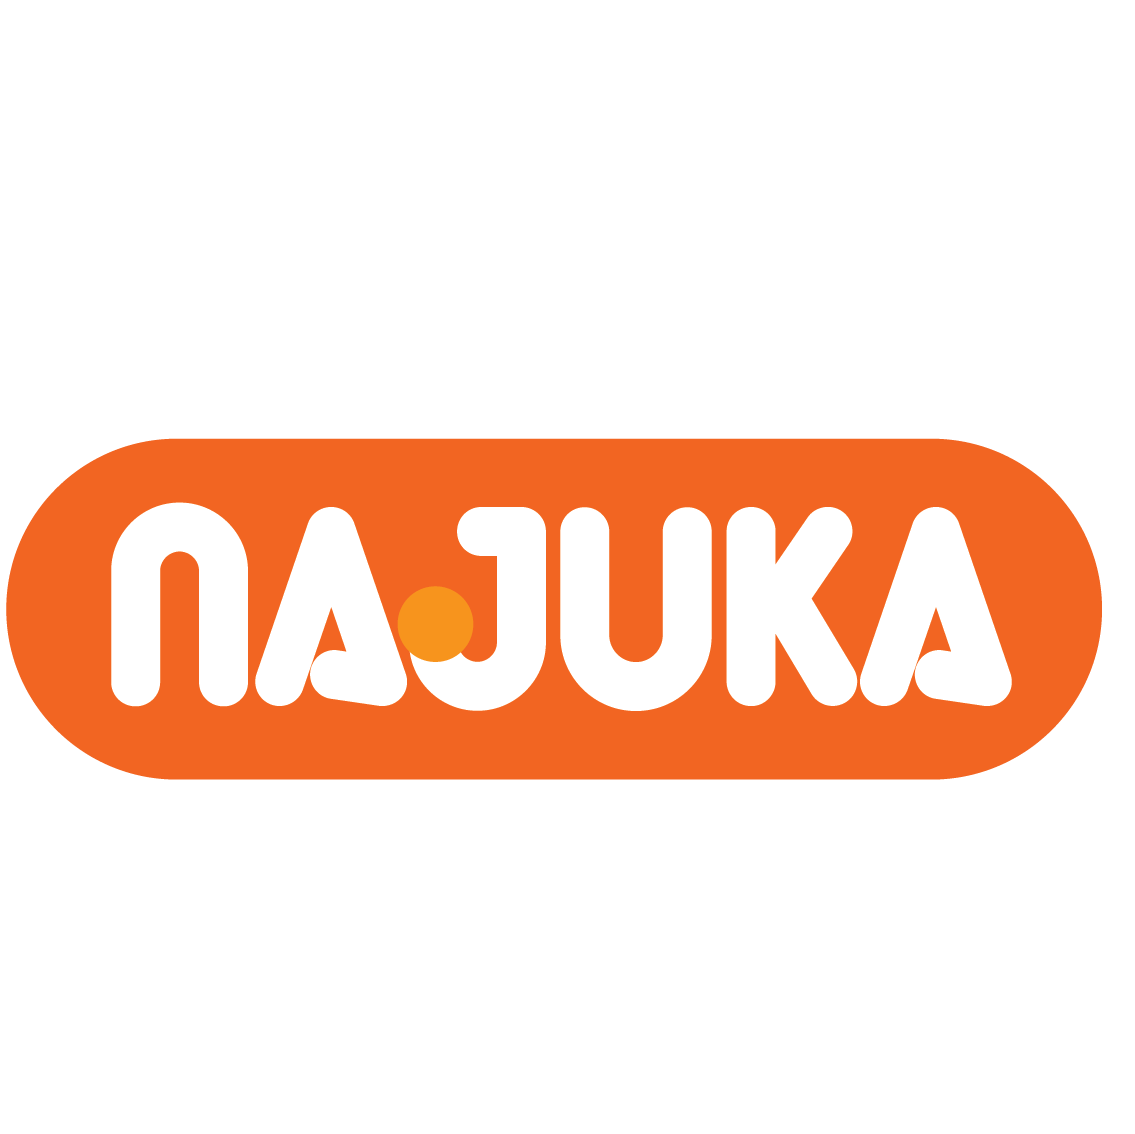 Najuka Cashew Enterprise